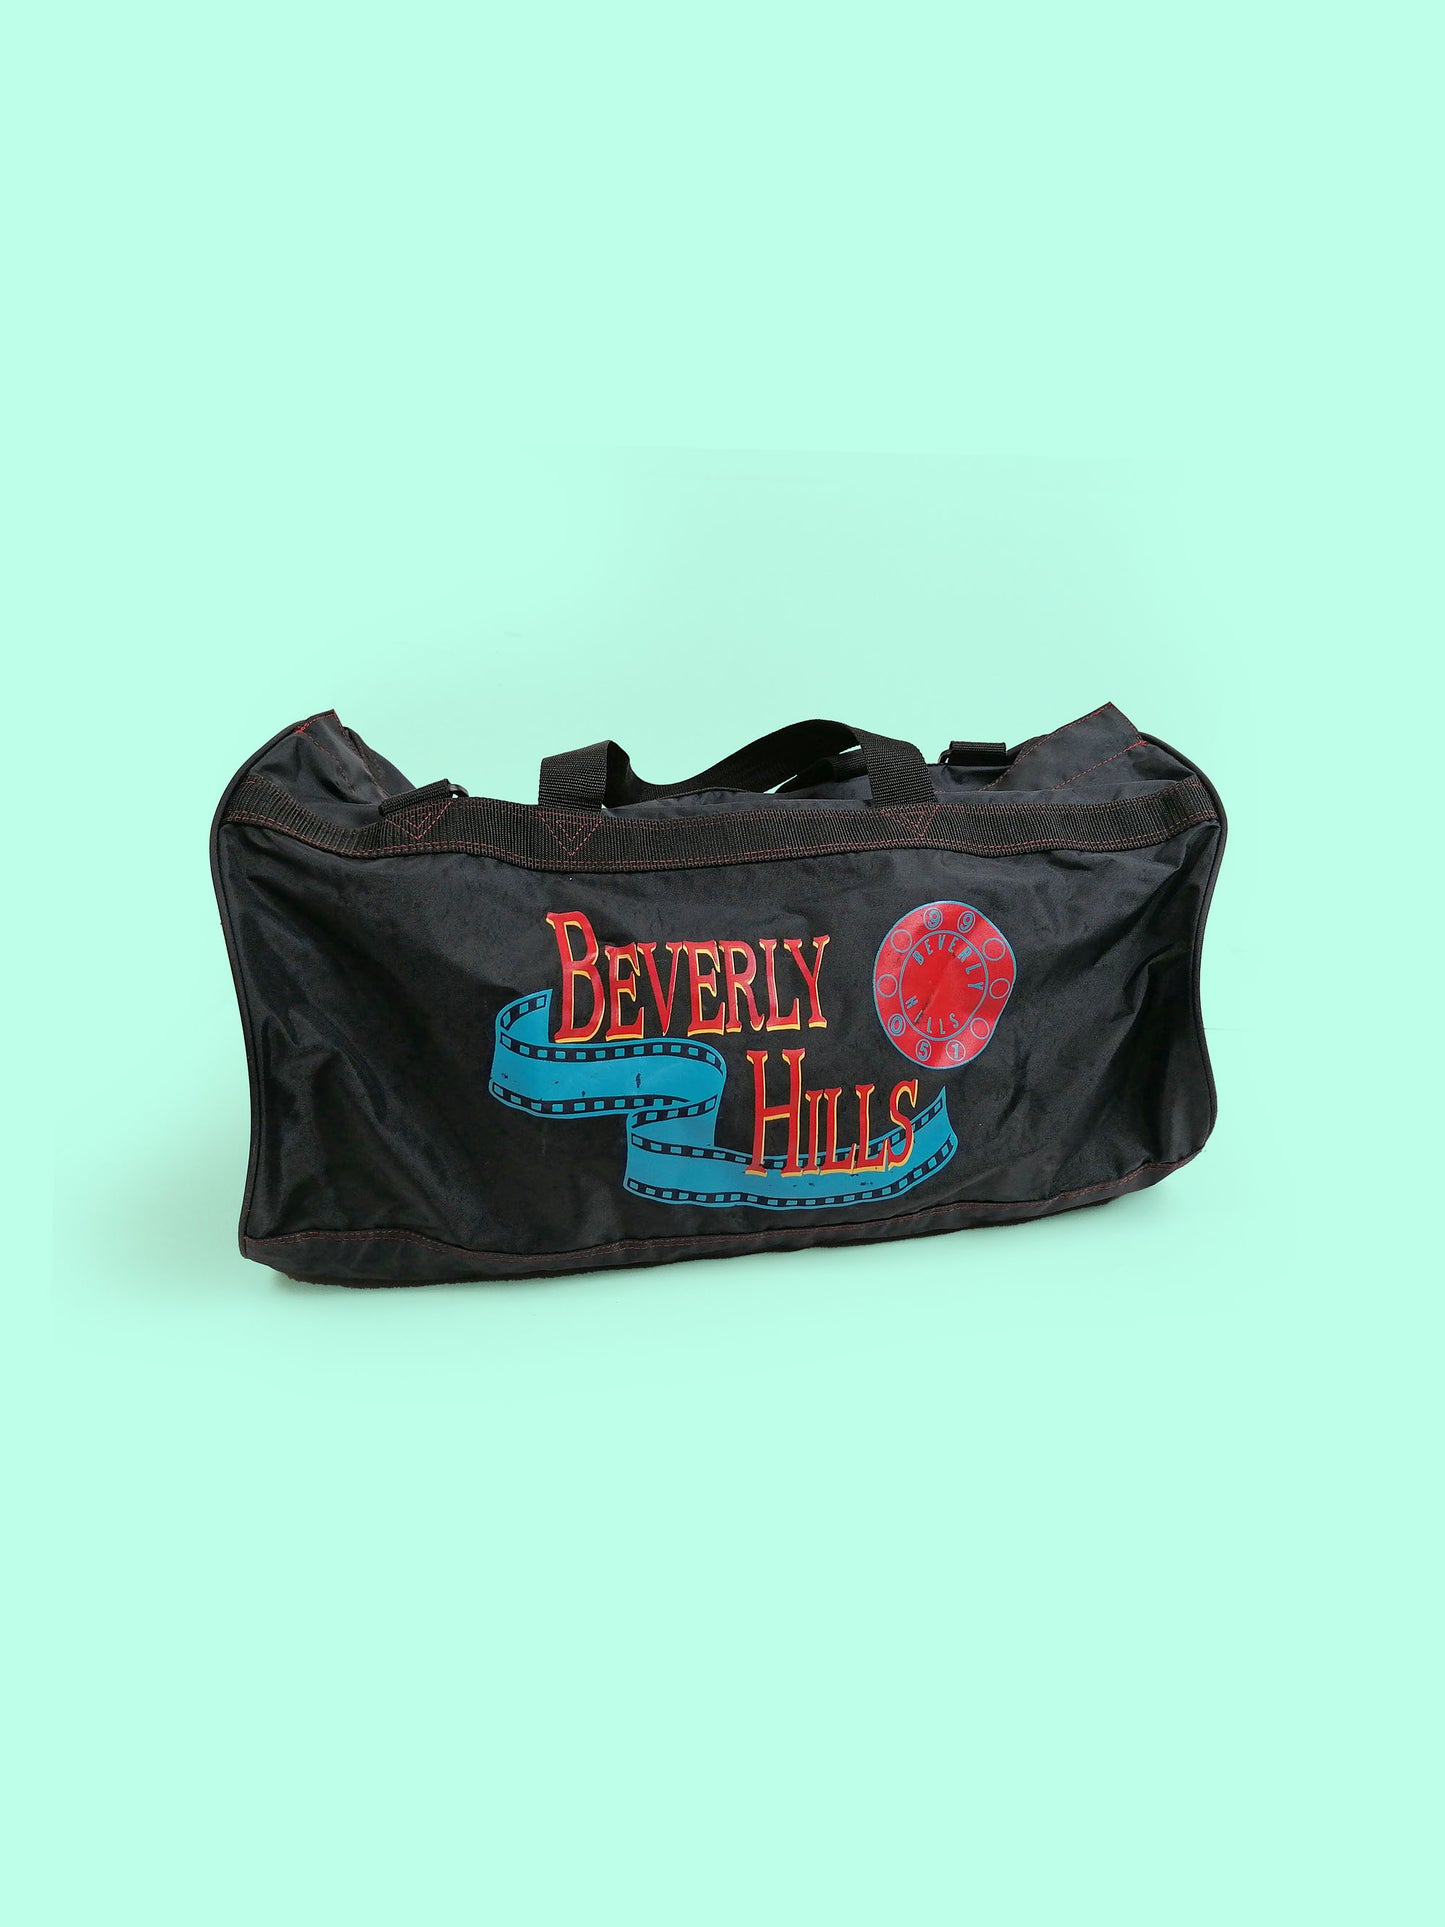 Vintage 90's BEVERLY HILLS Big Duffel Bag